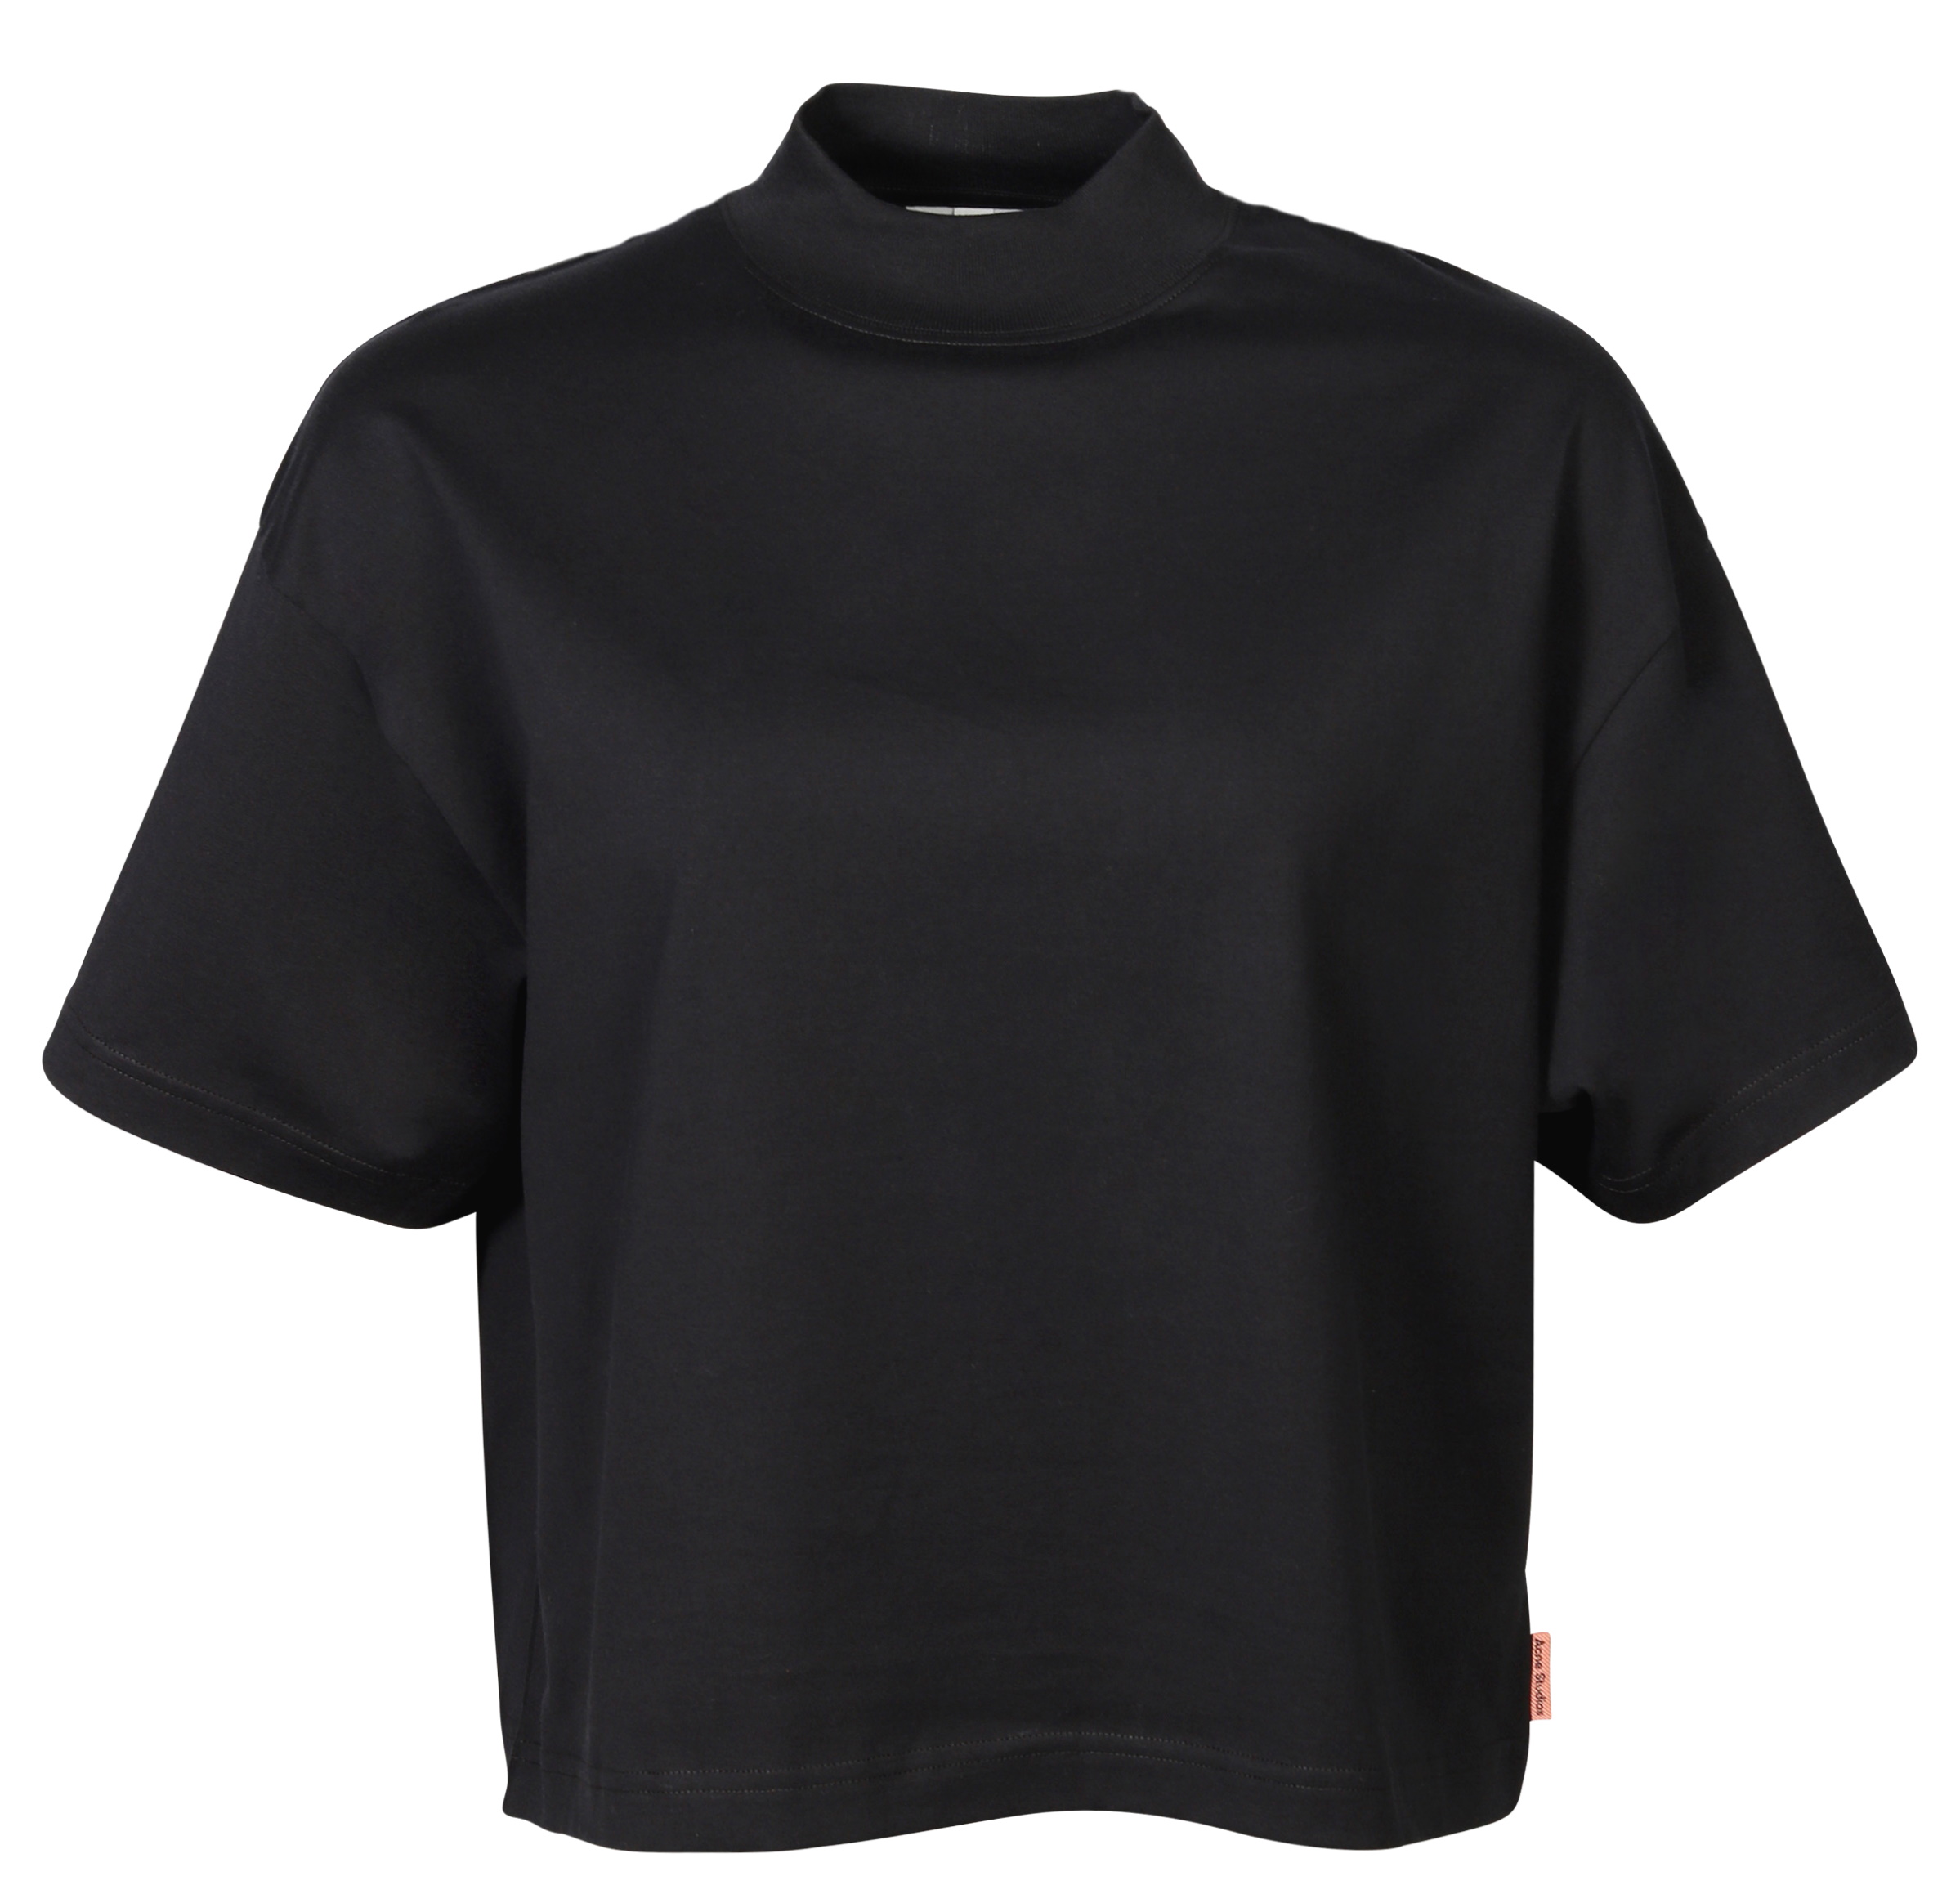 Acne Studios Cropped Turtle Neck T-Shirt Emirka Black M